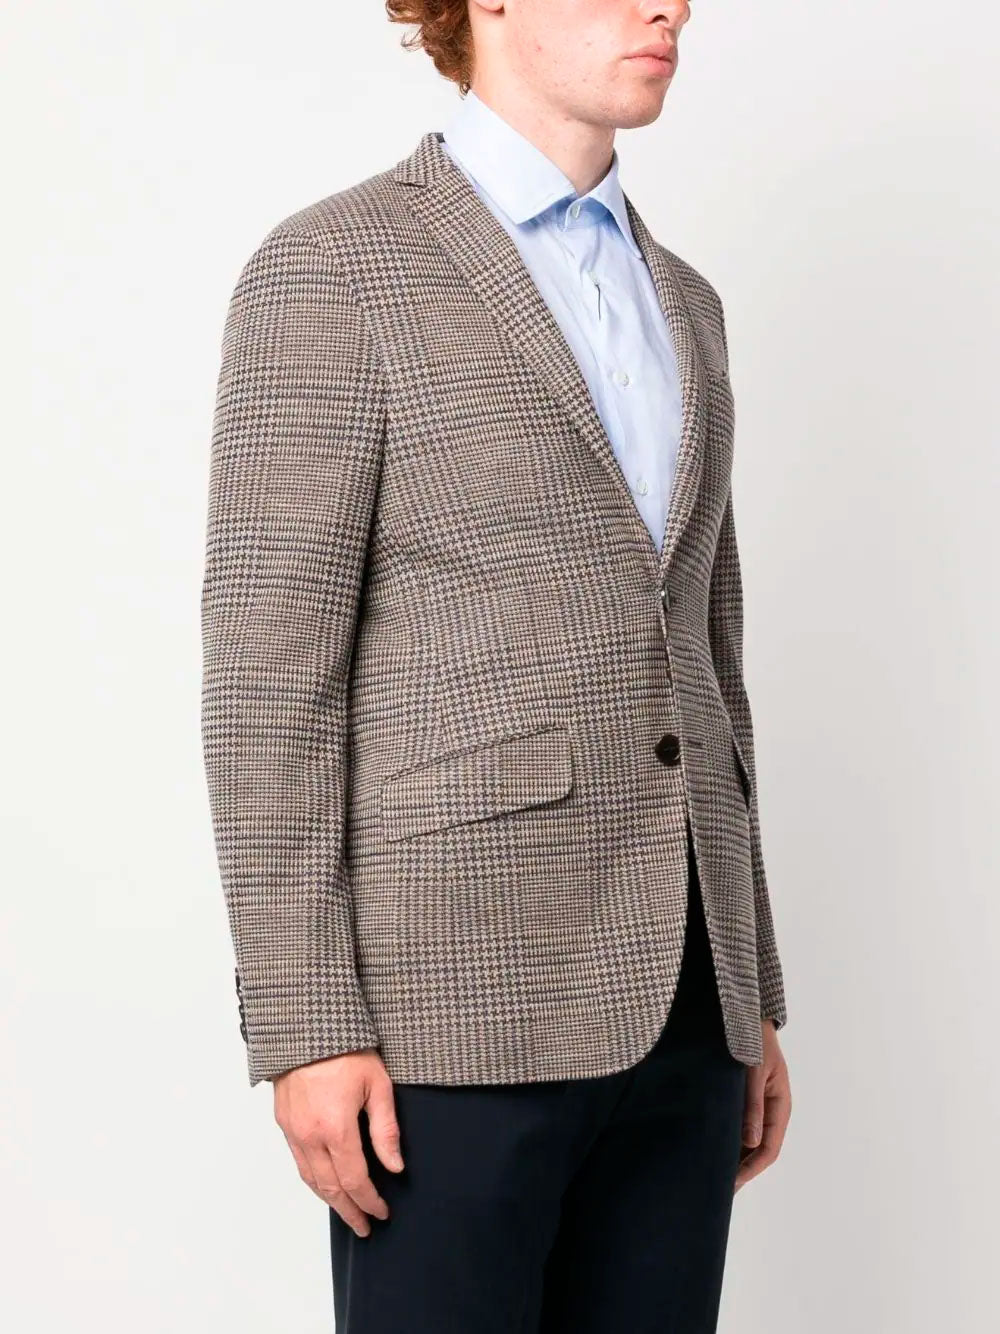 Prince of Wales check pattern jacket